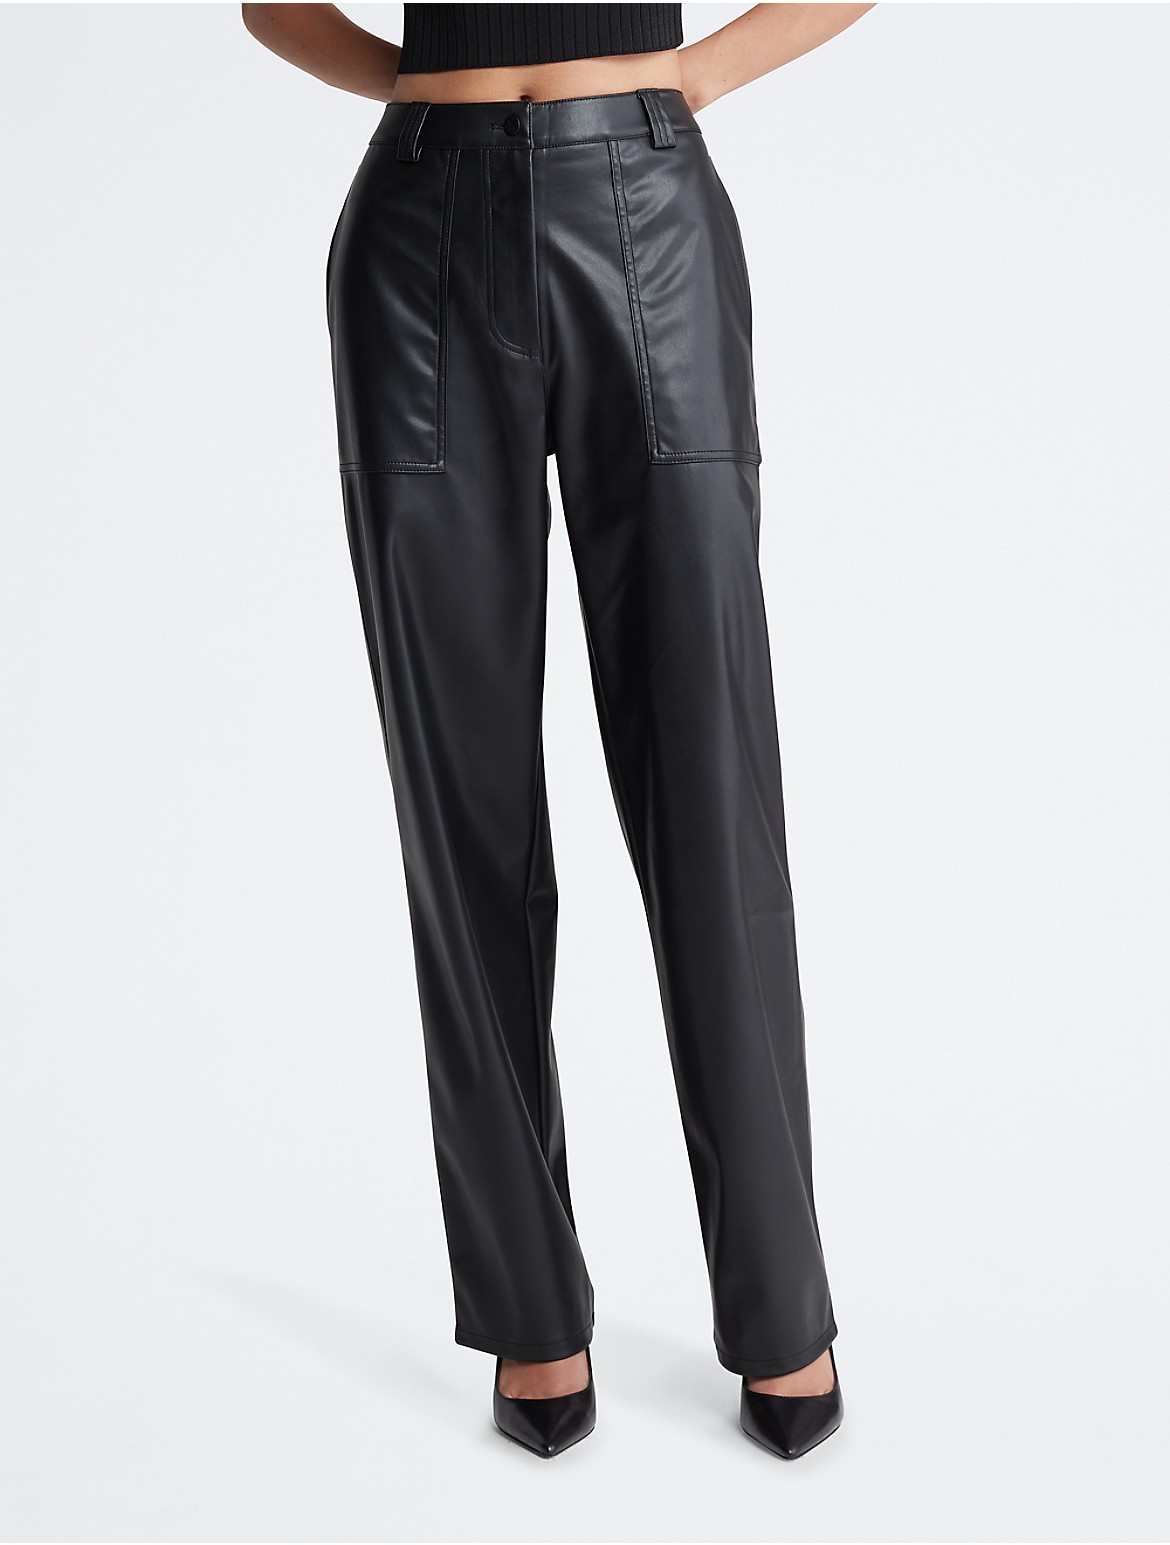 Calvin Klein Women's Faux Leather High Rise Straight Leg Pants - Black - XS